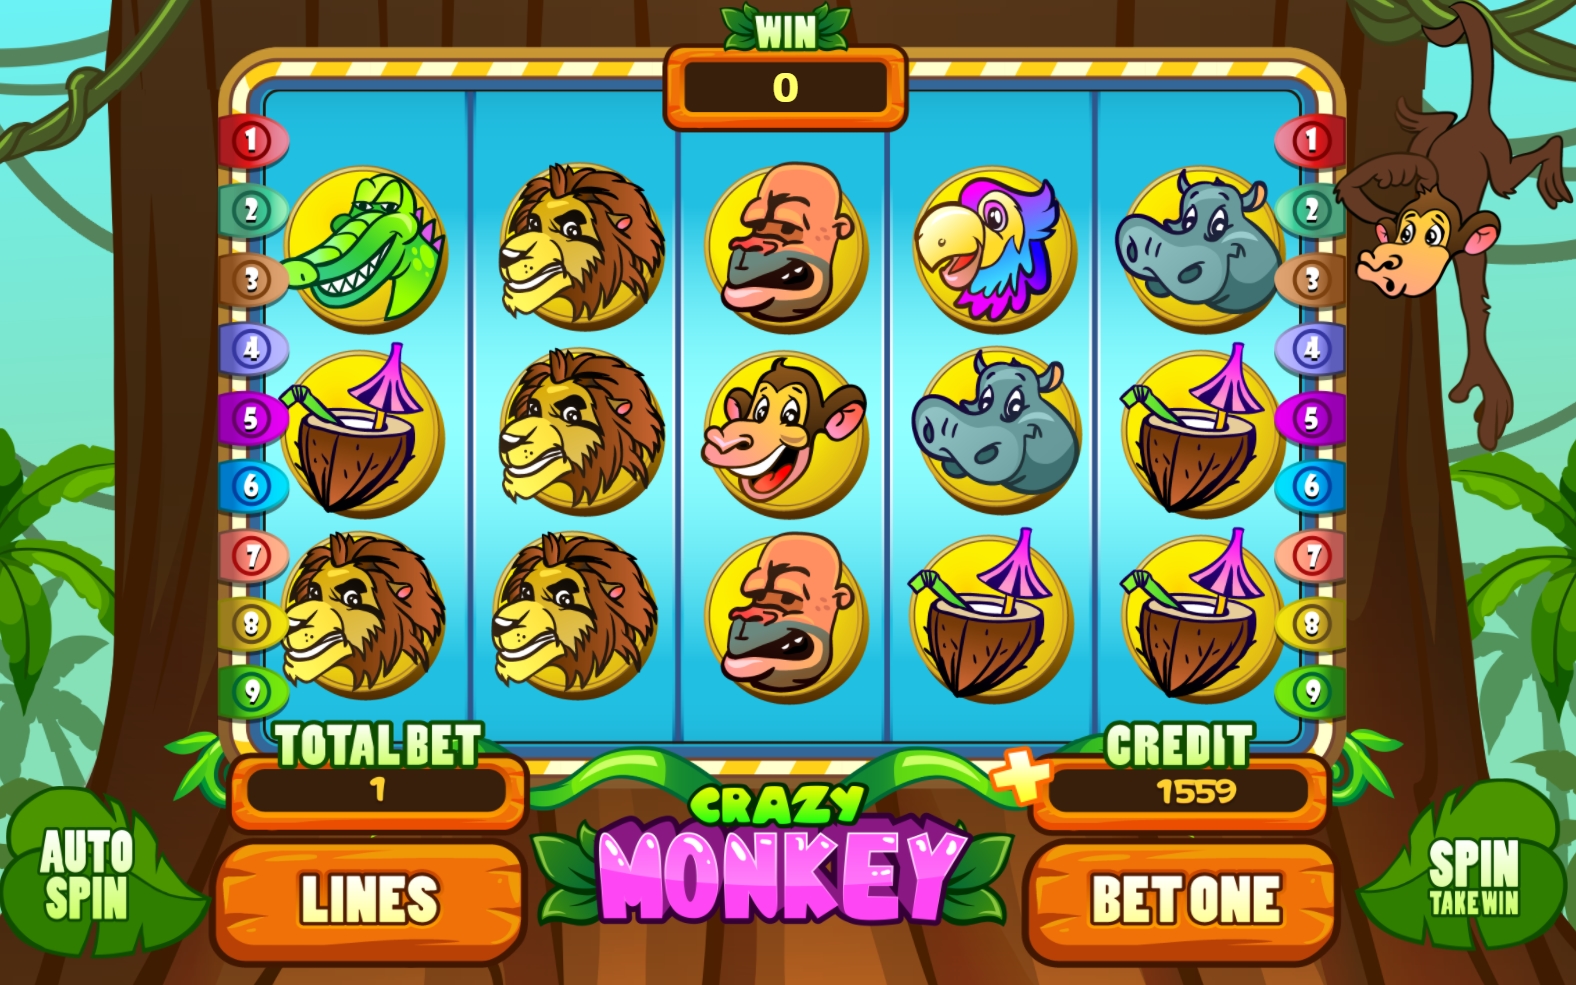 Crazy monkey casino games download